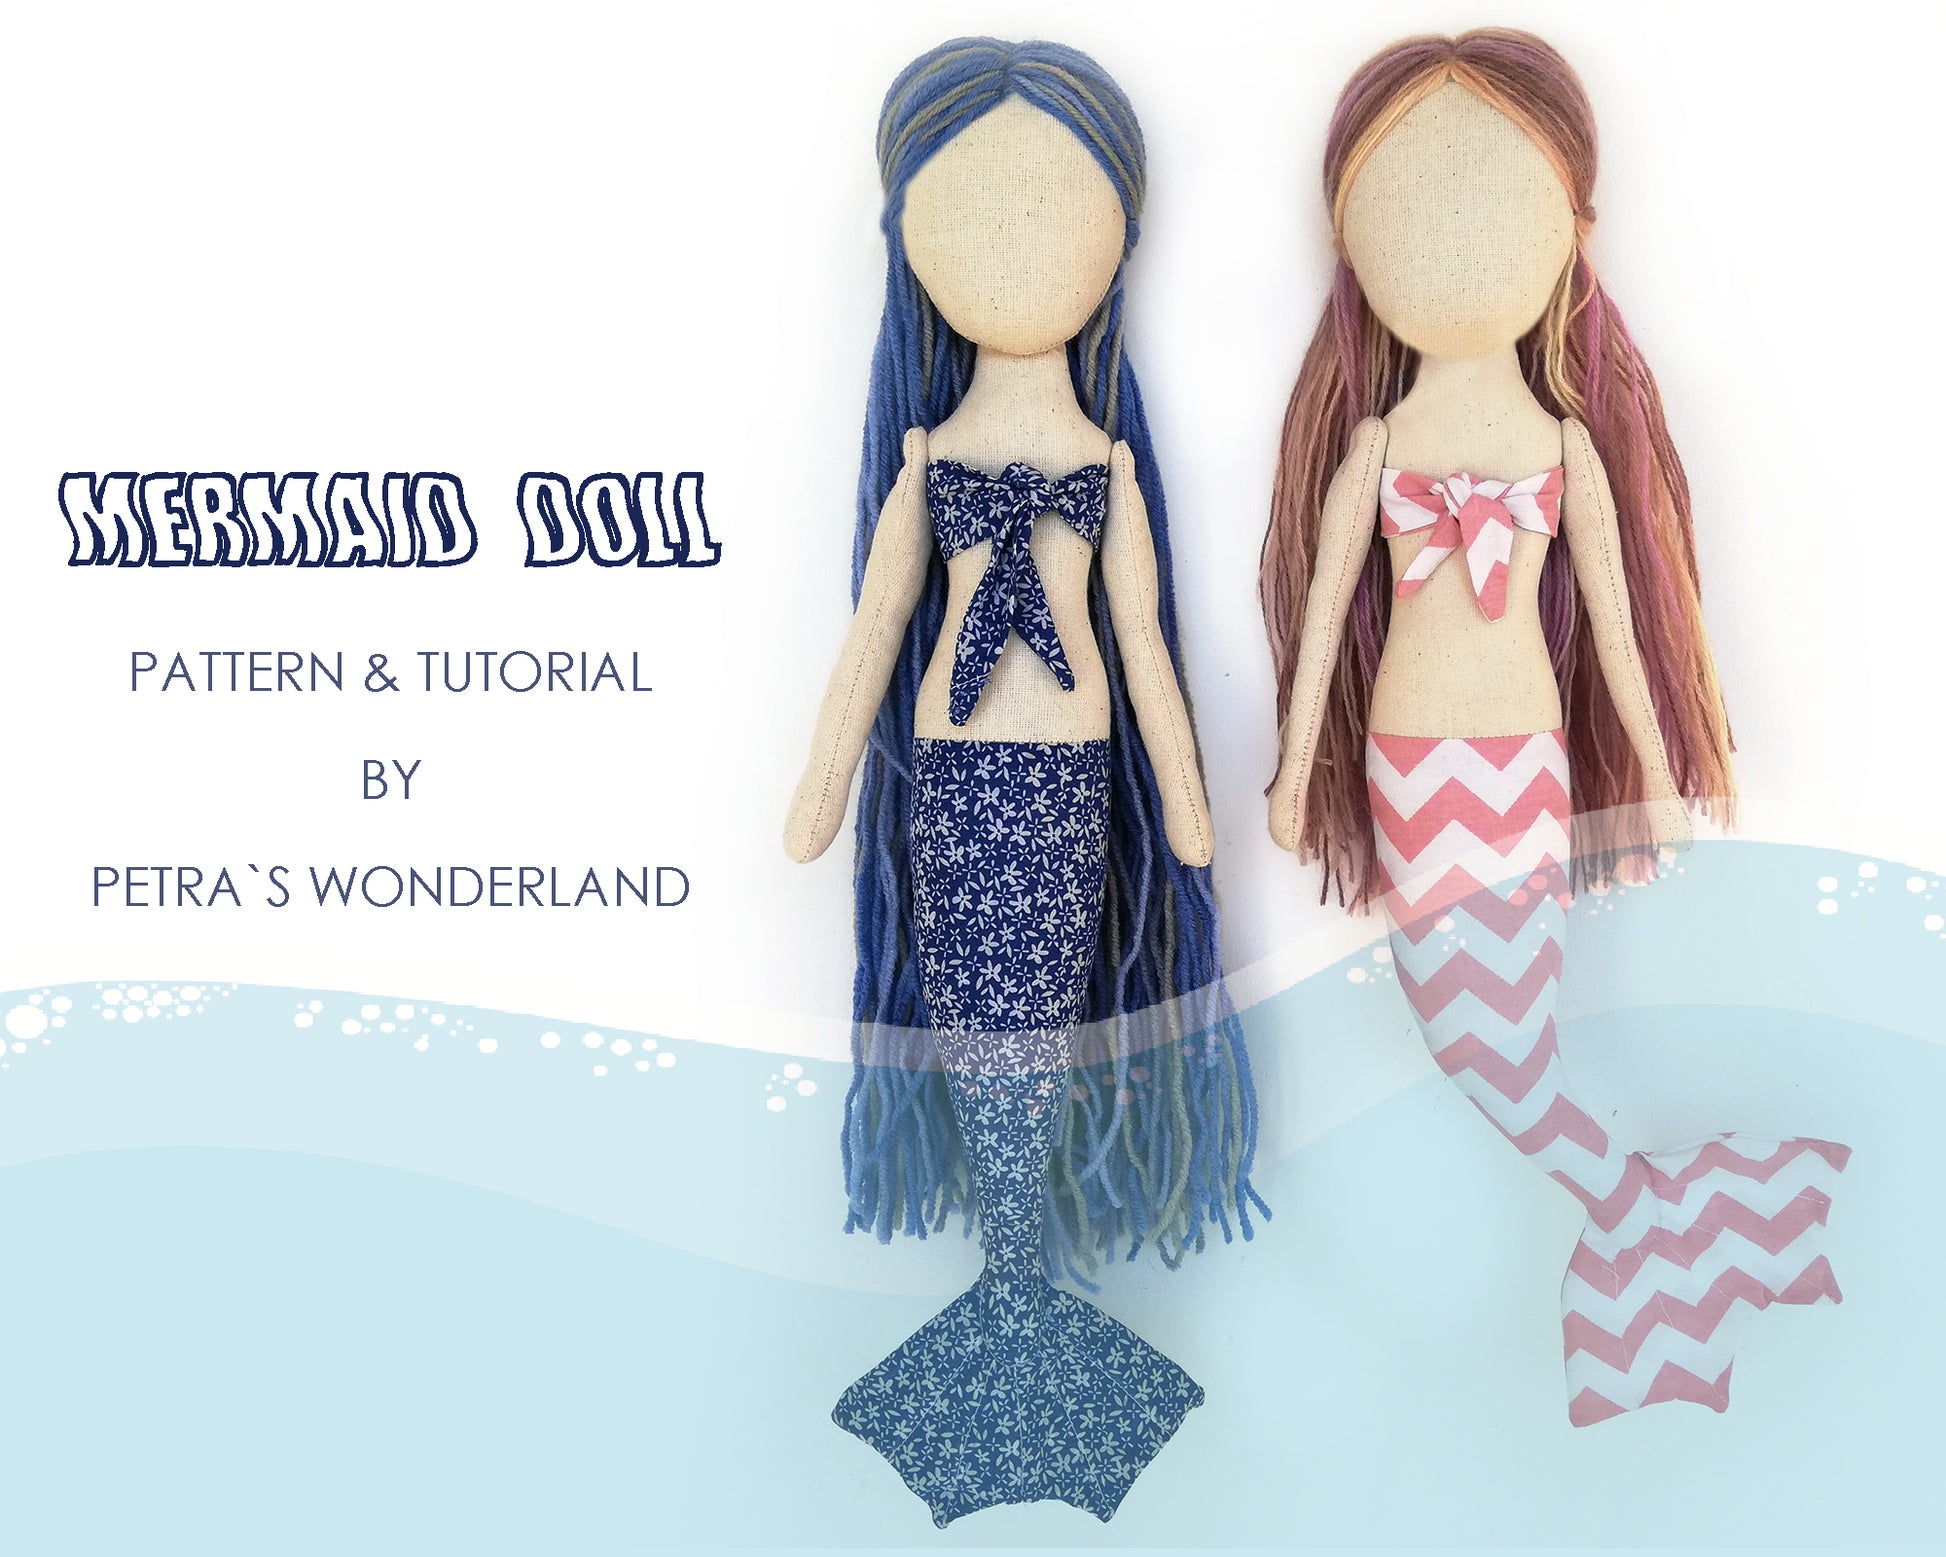 Mermaid doll - PDF doll sewing pattern and tutorial